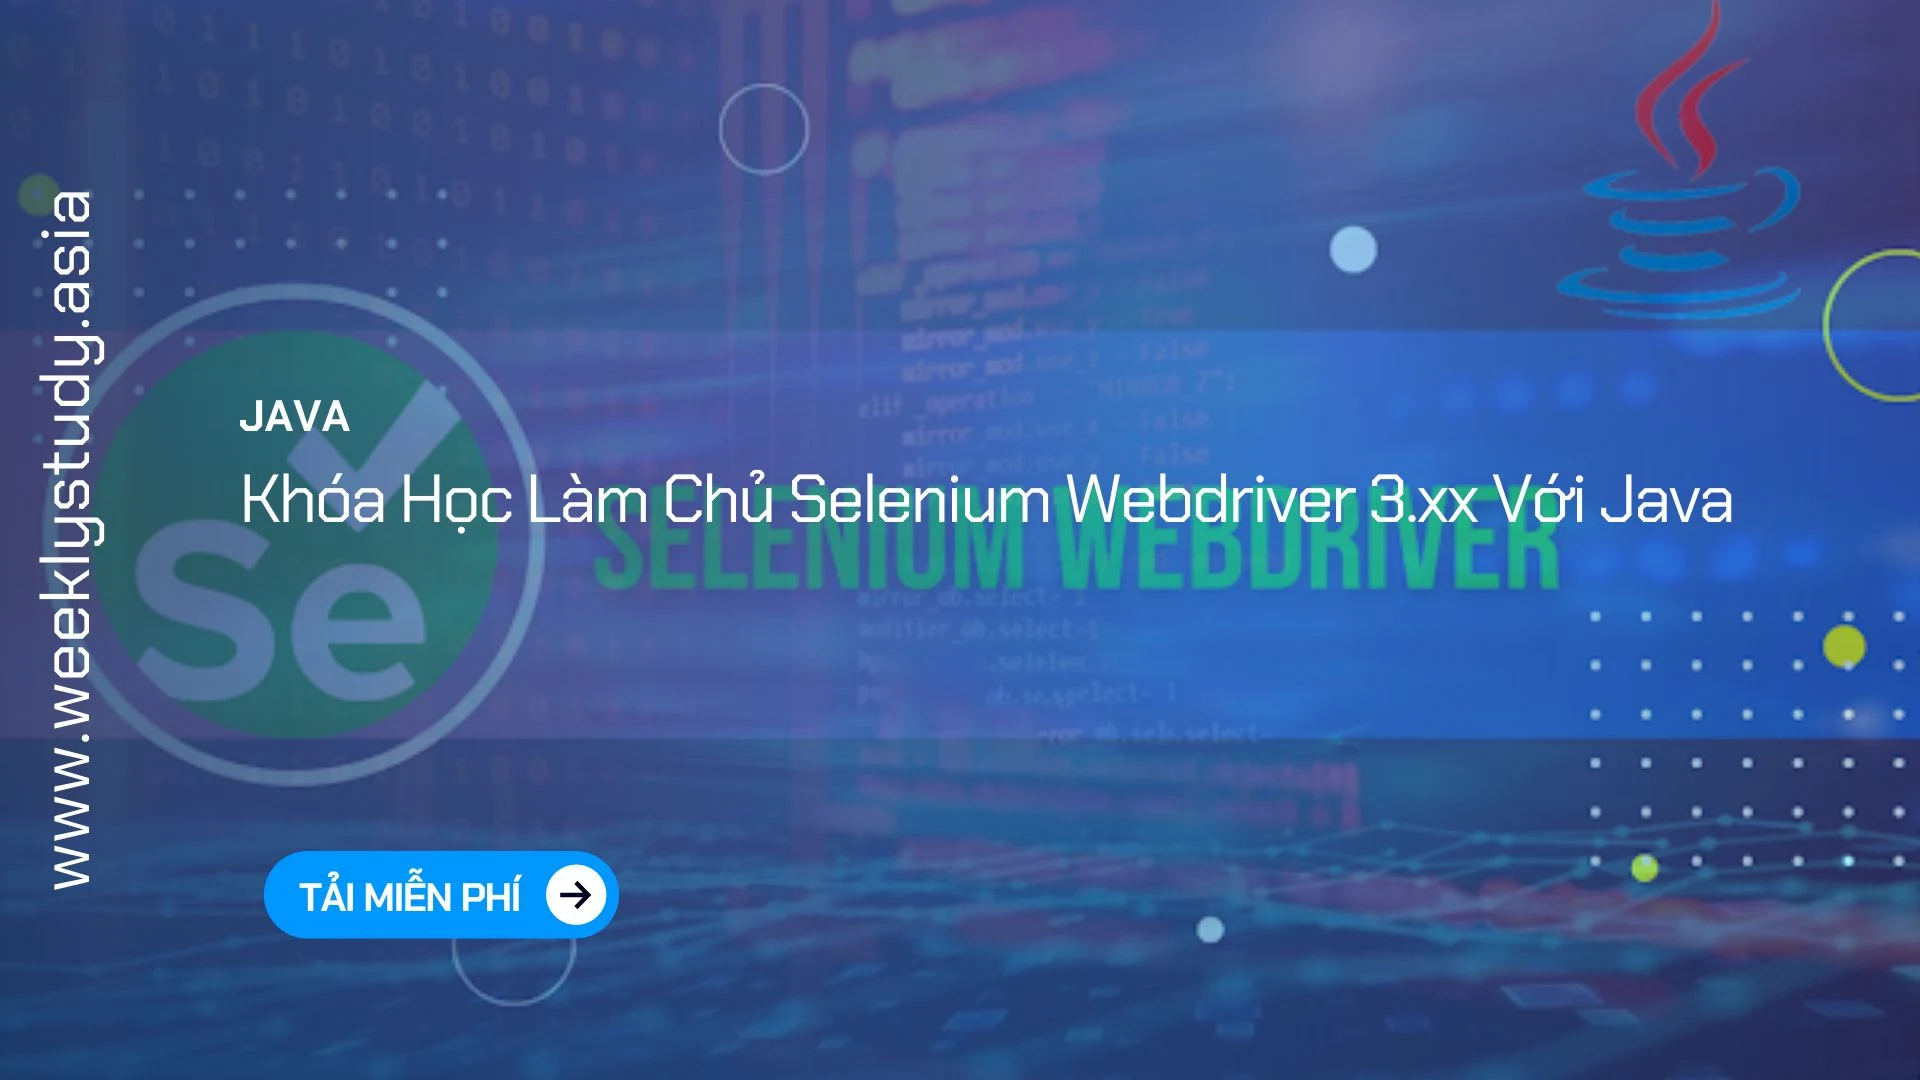 weekly-study-khoa-hoc-lam-chu-selenium-webdriver-3-xx-voi-java-ma-9401v